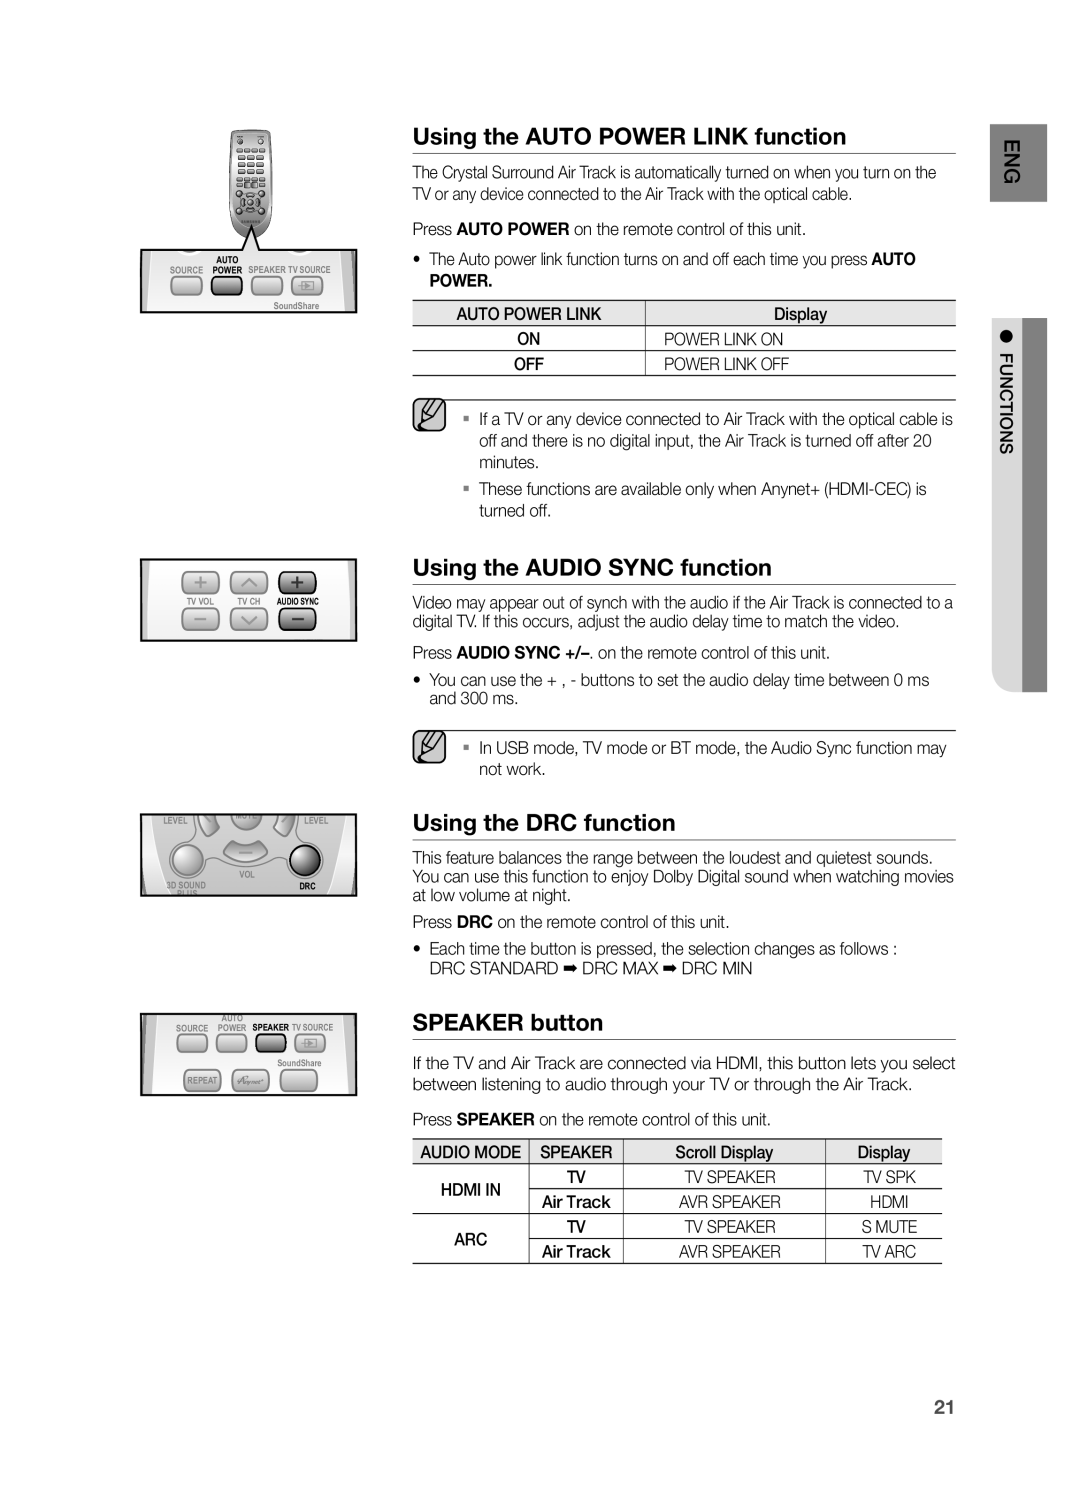 Samsung HW-FM55C Using the AUTO POWER LINK function, Using the AUDIO SYNC function, Using the DRC function, SPEAKER button 